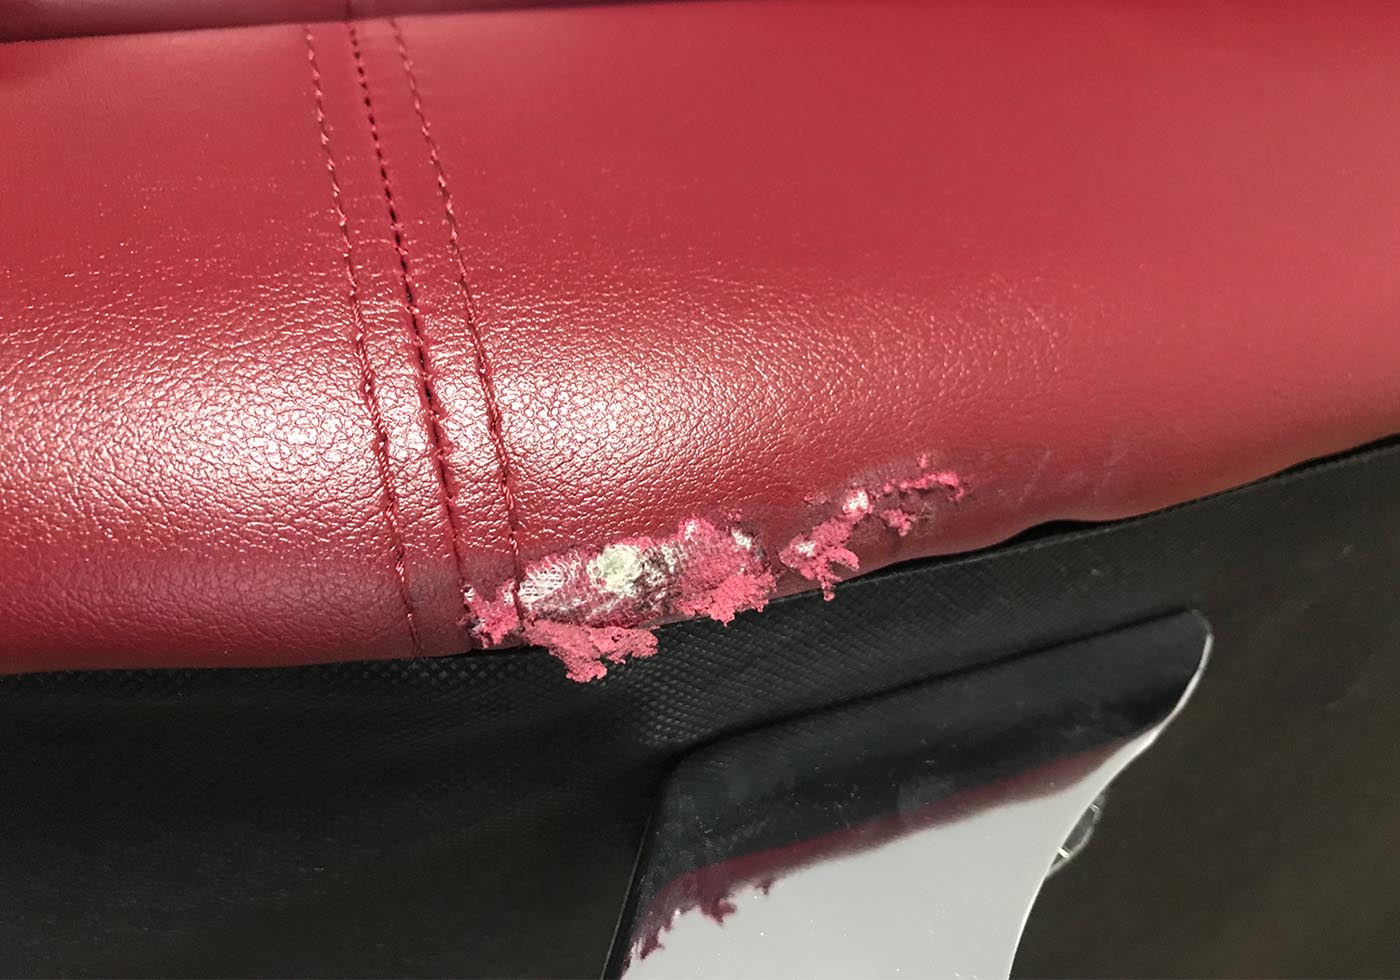 Vinyl leather tear damage